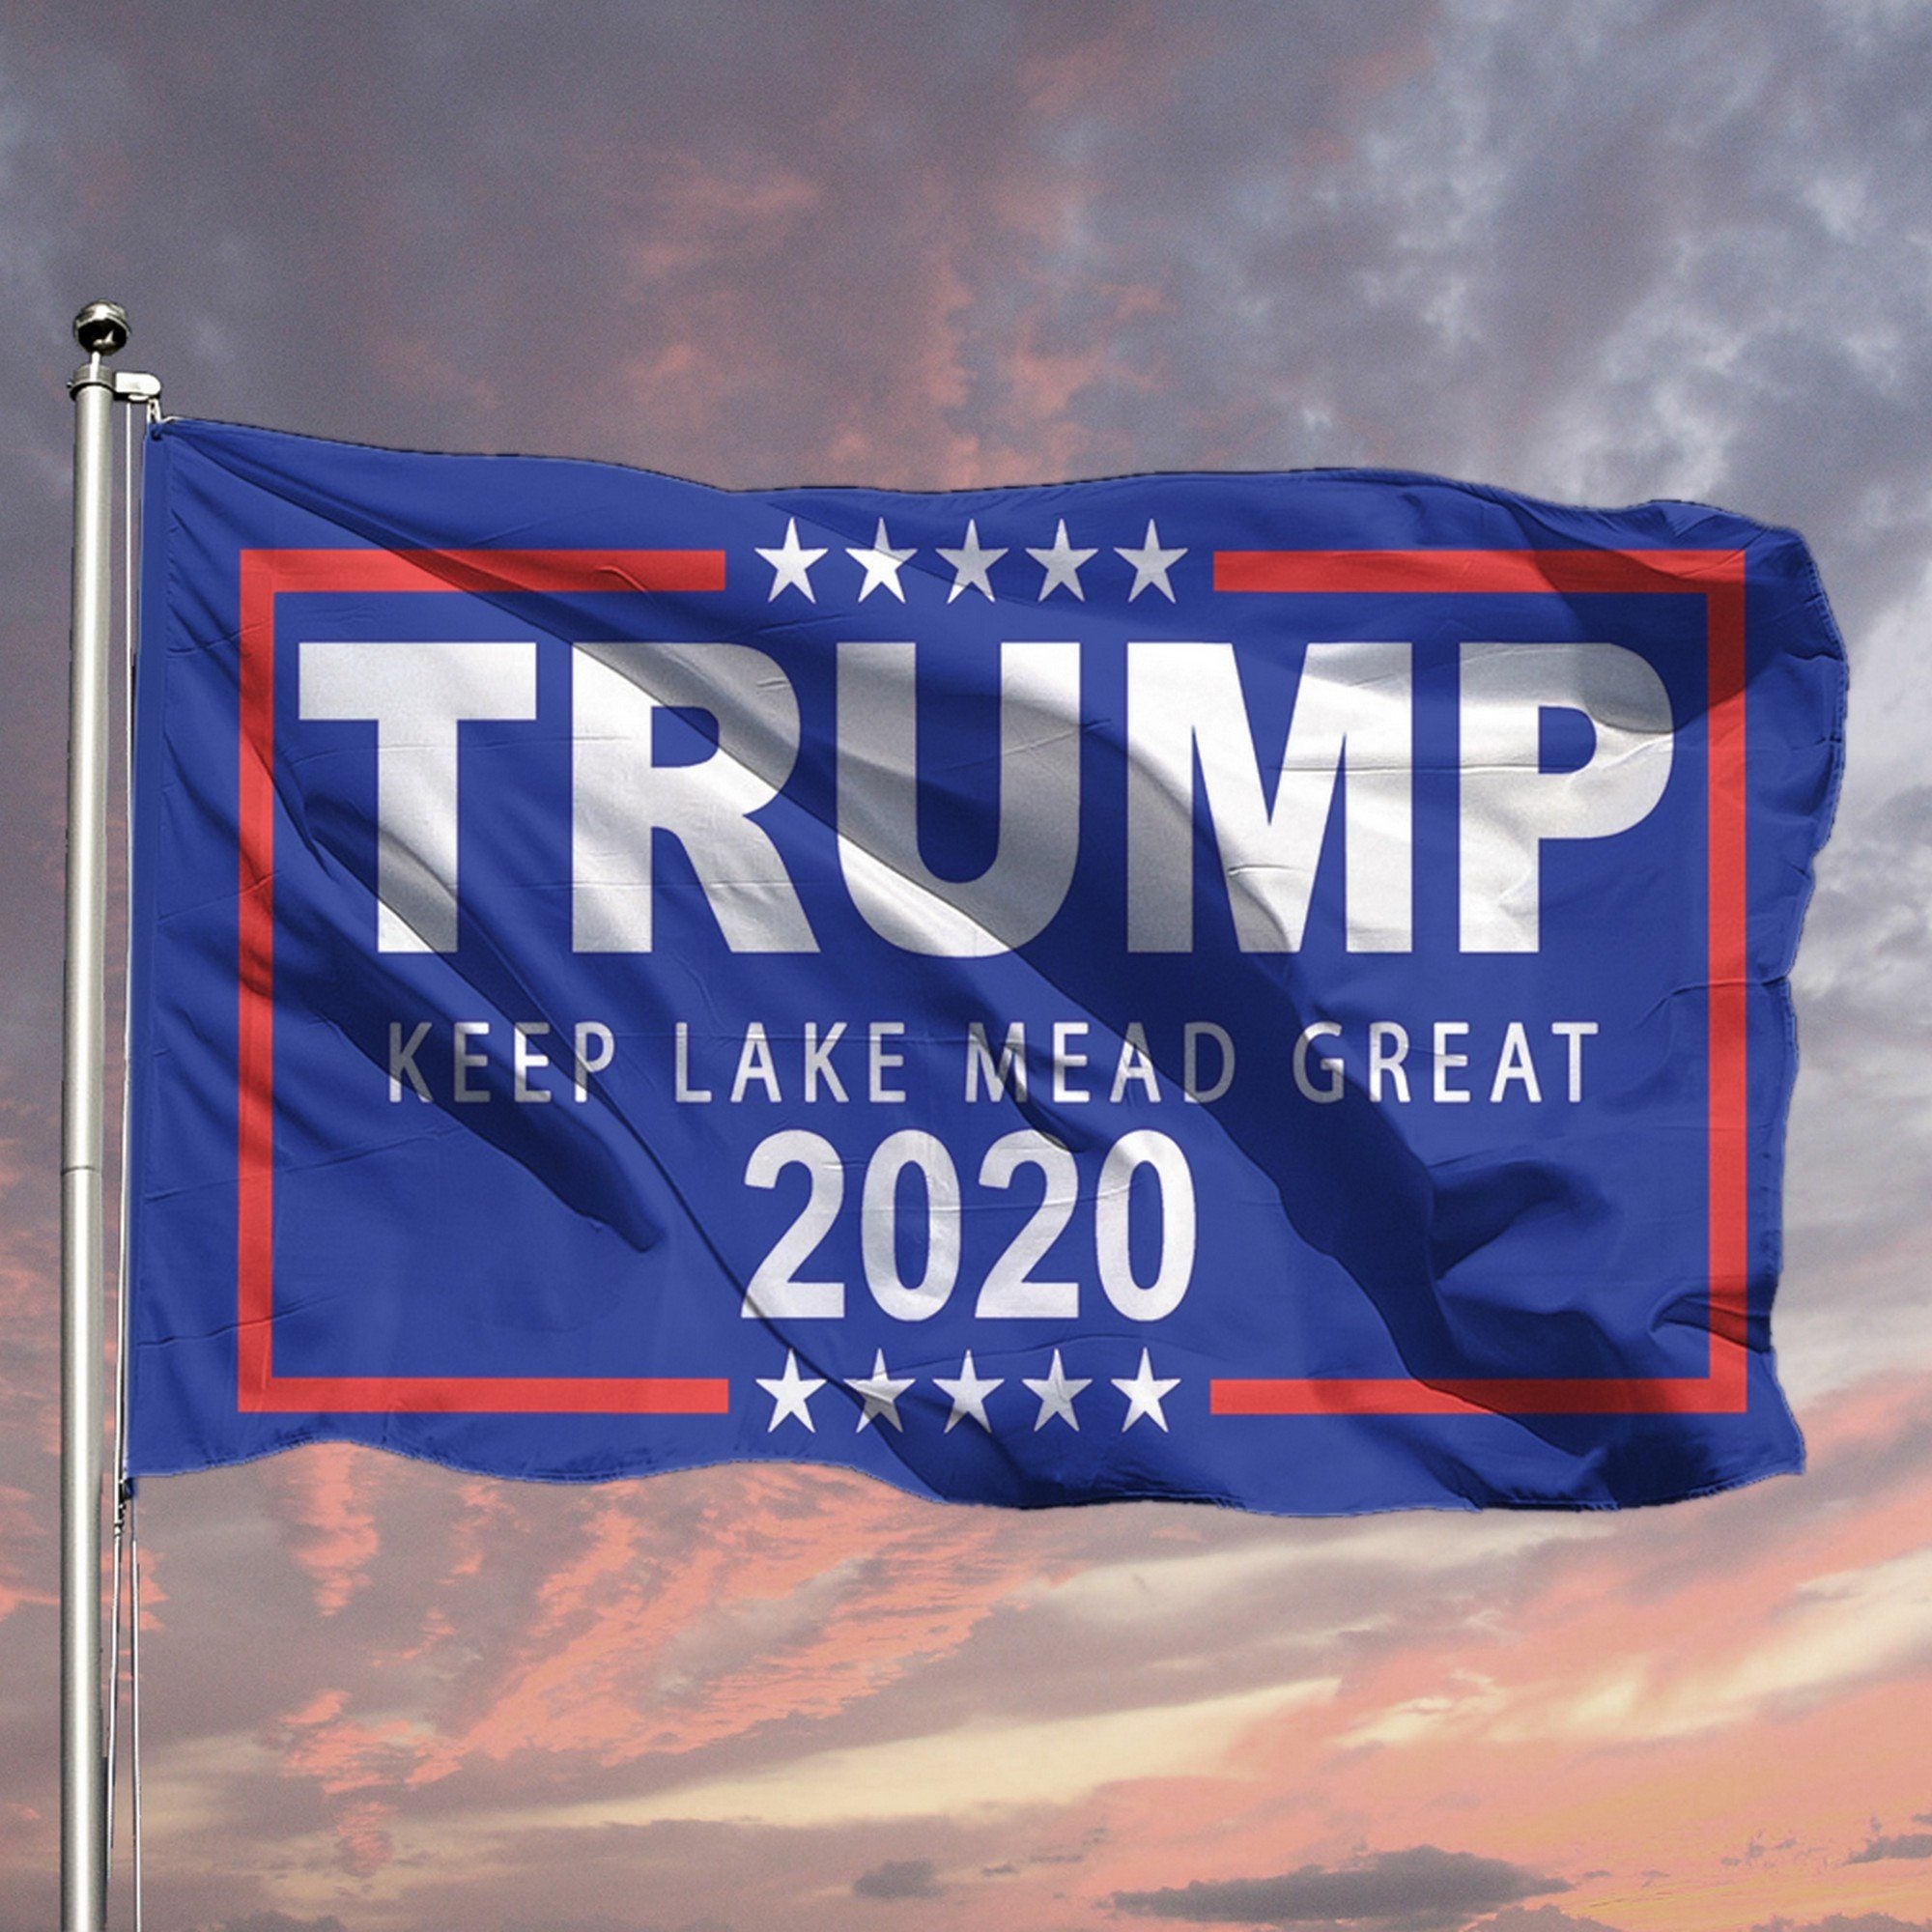 Trump Boat Flags - Keep Lake Mead Great - Houseboat Kings